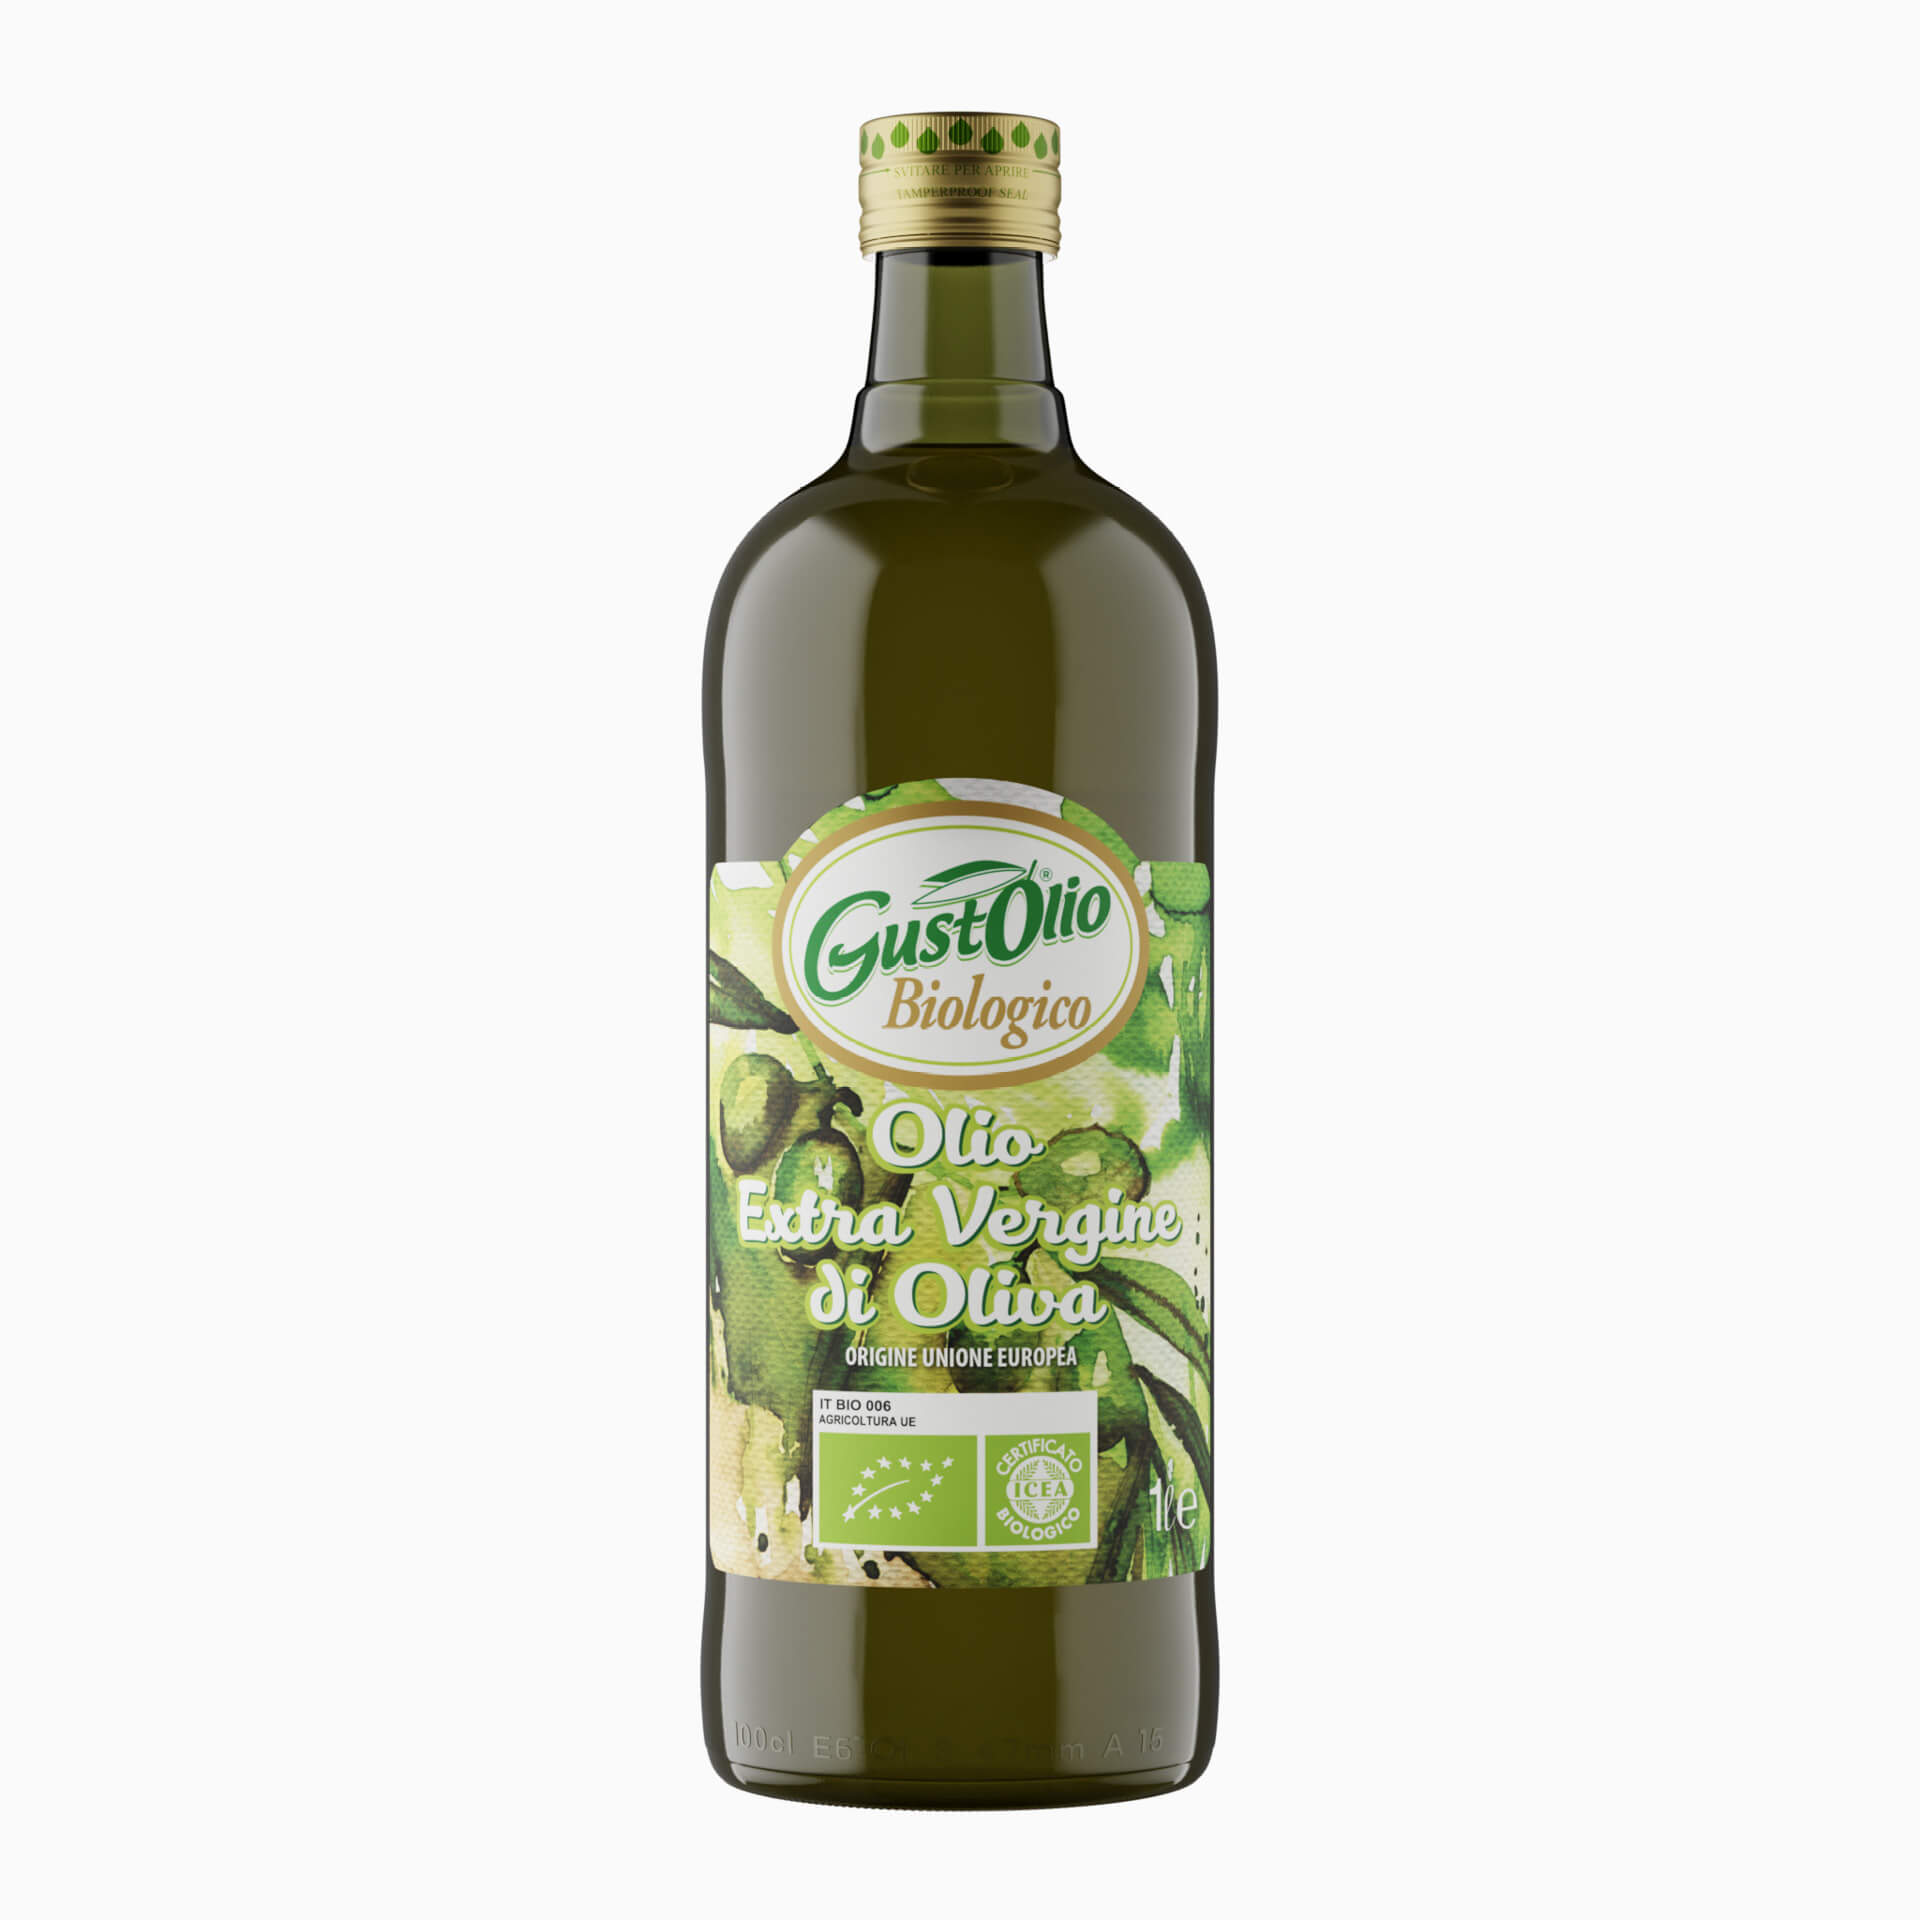 EU Organic Extra Virgin Olive Oil